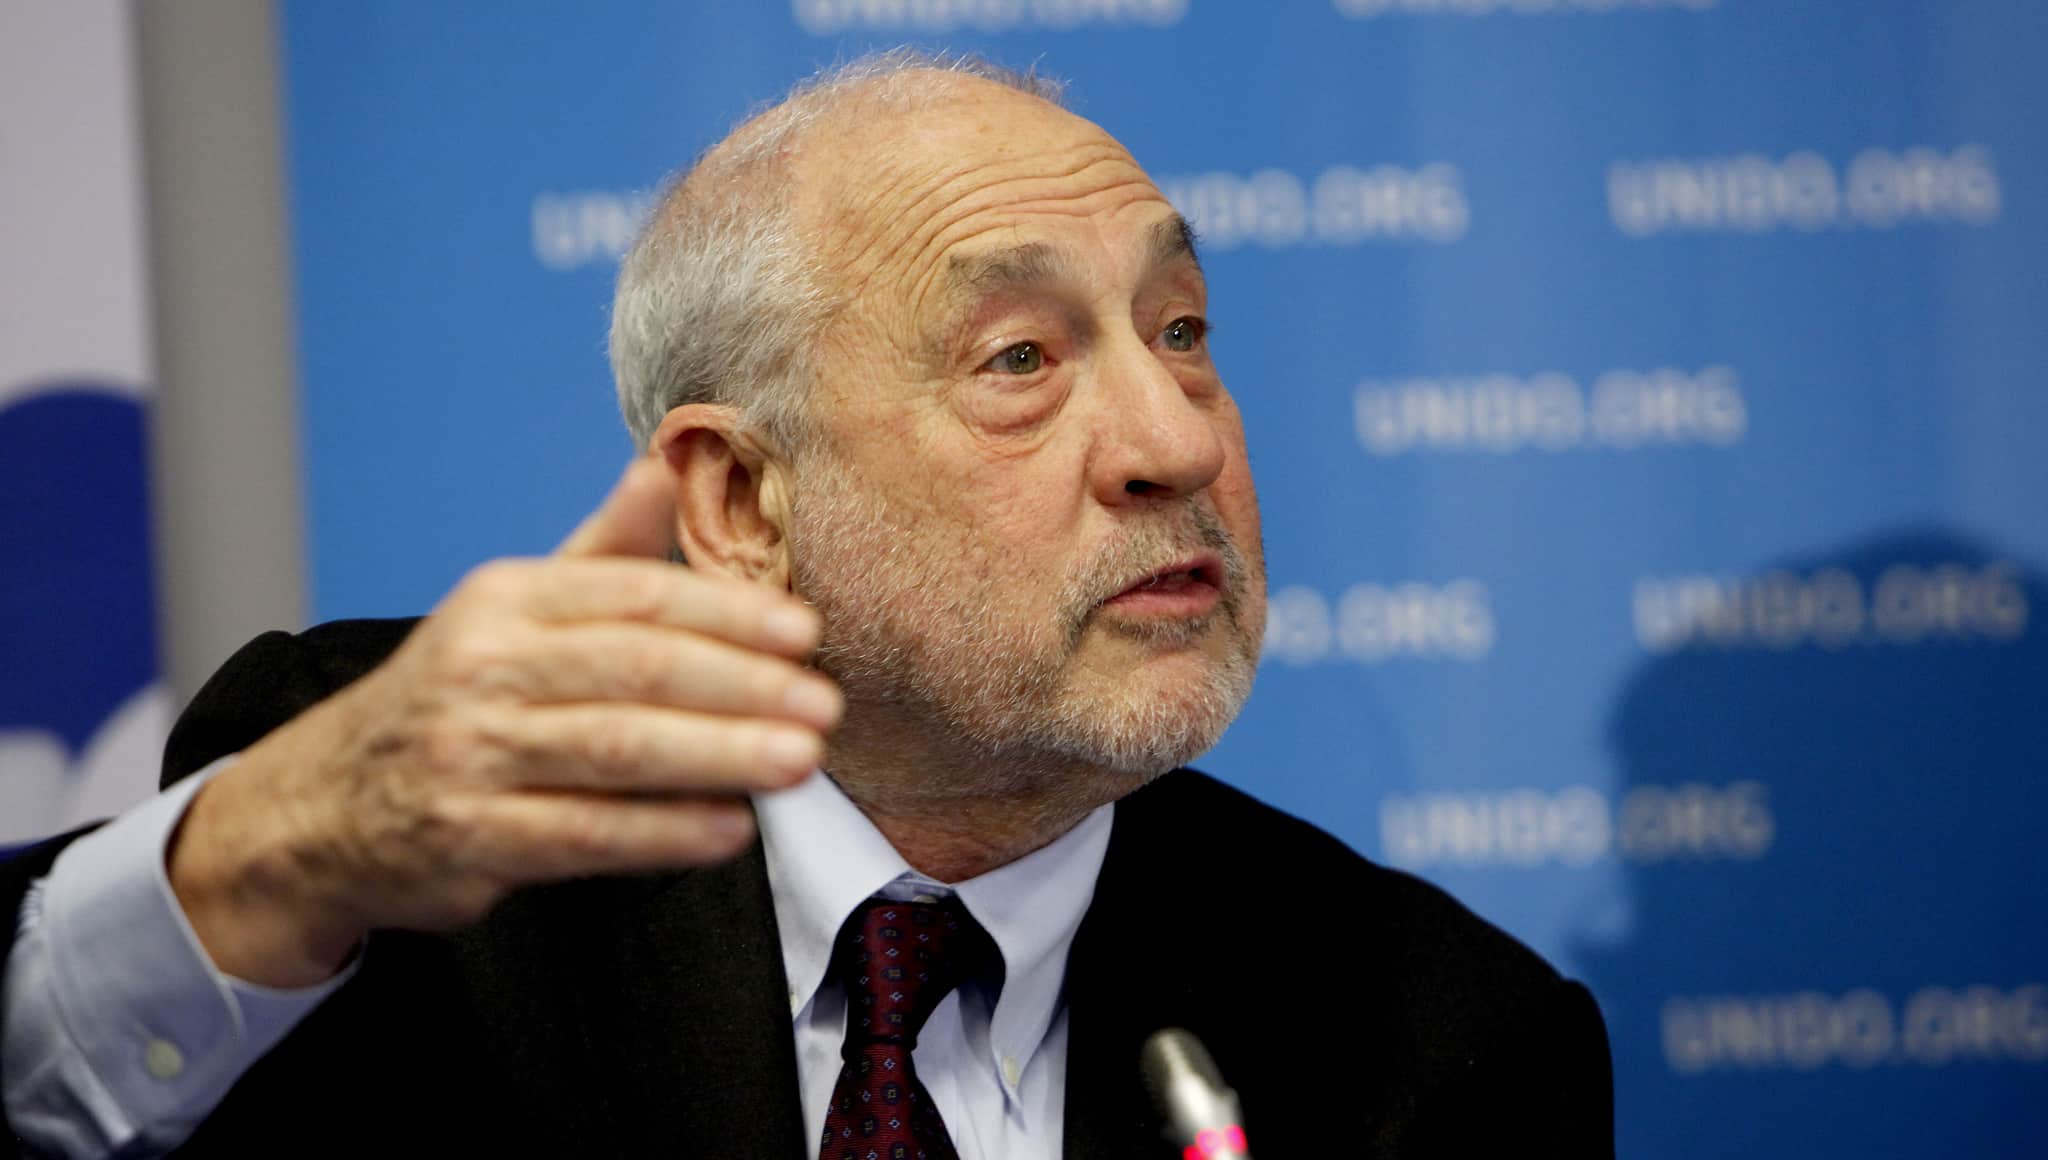 Nobel Laureate Stiglitz: "Why Do People Want Bitcoin?"